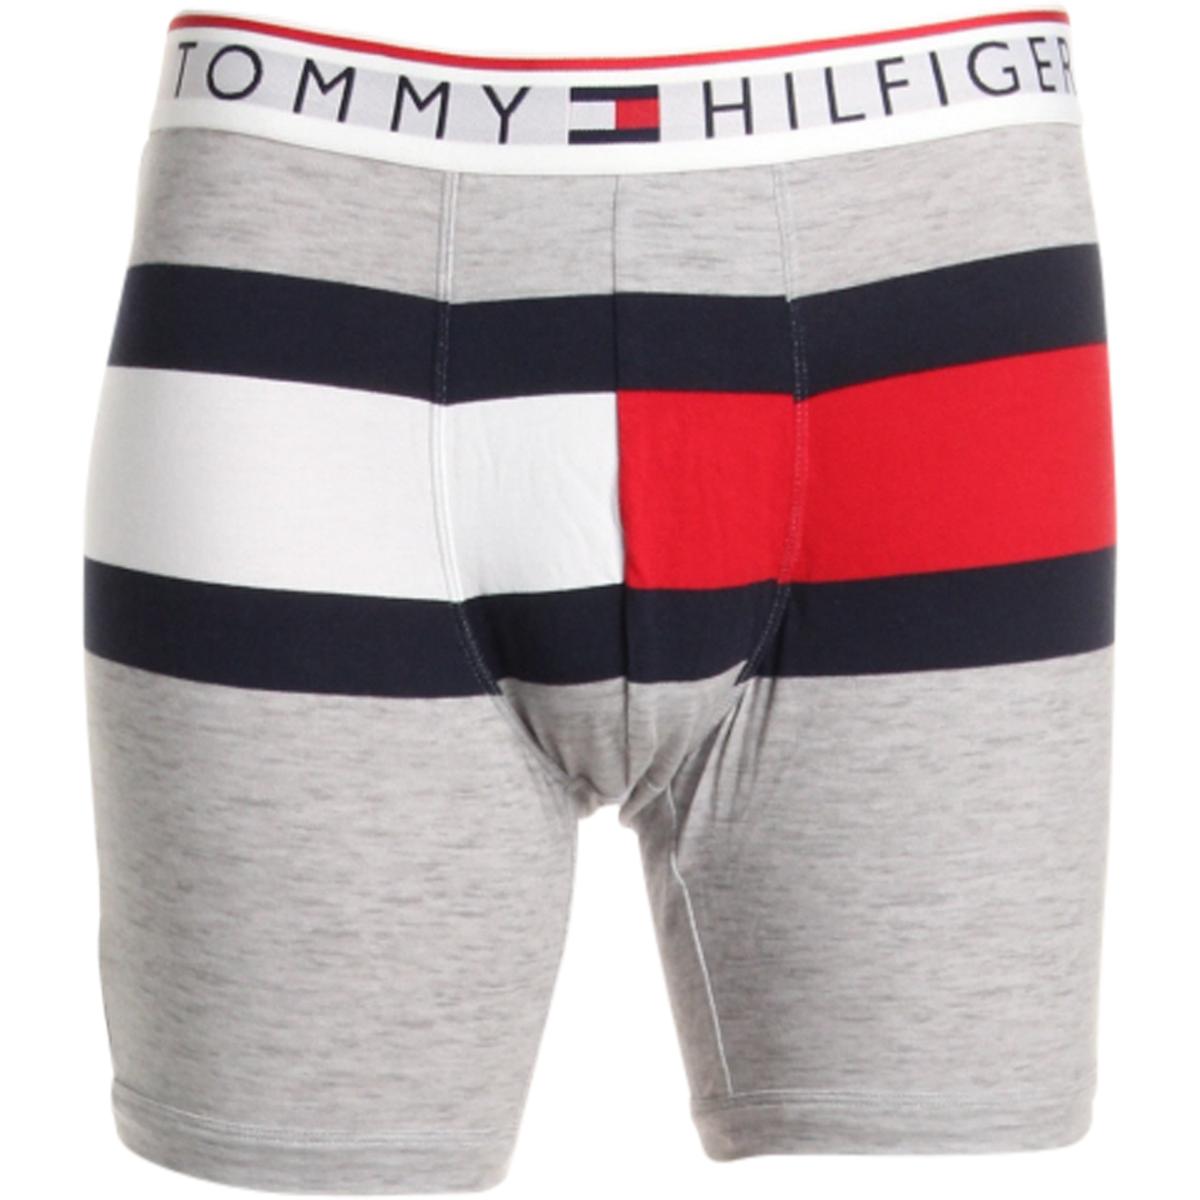 Tommy Hilfiger Mens Gray Flag Colorblock Boxer Briefs M 32-34 BHFO 9939 ...